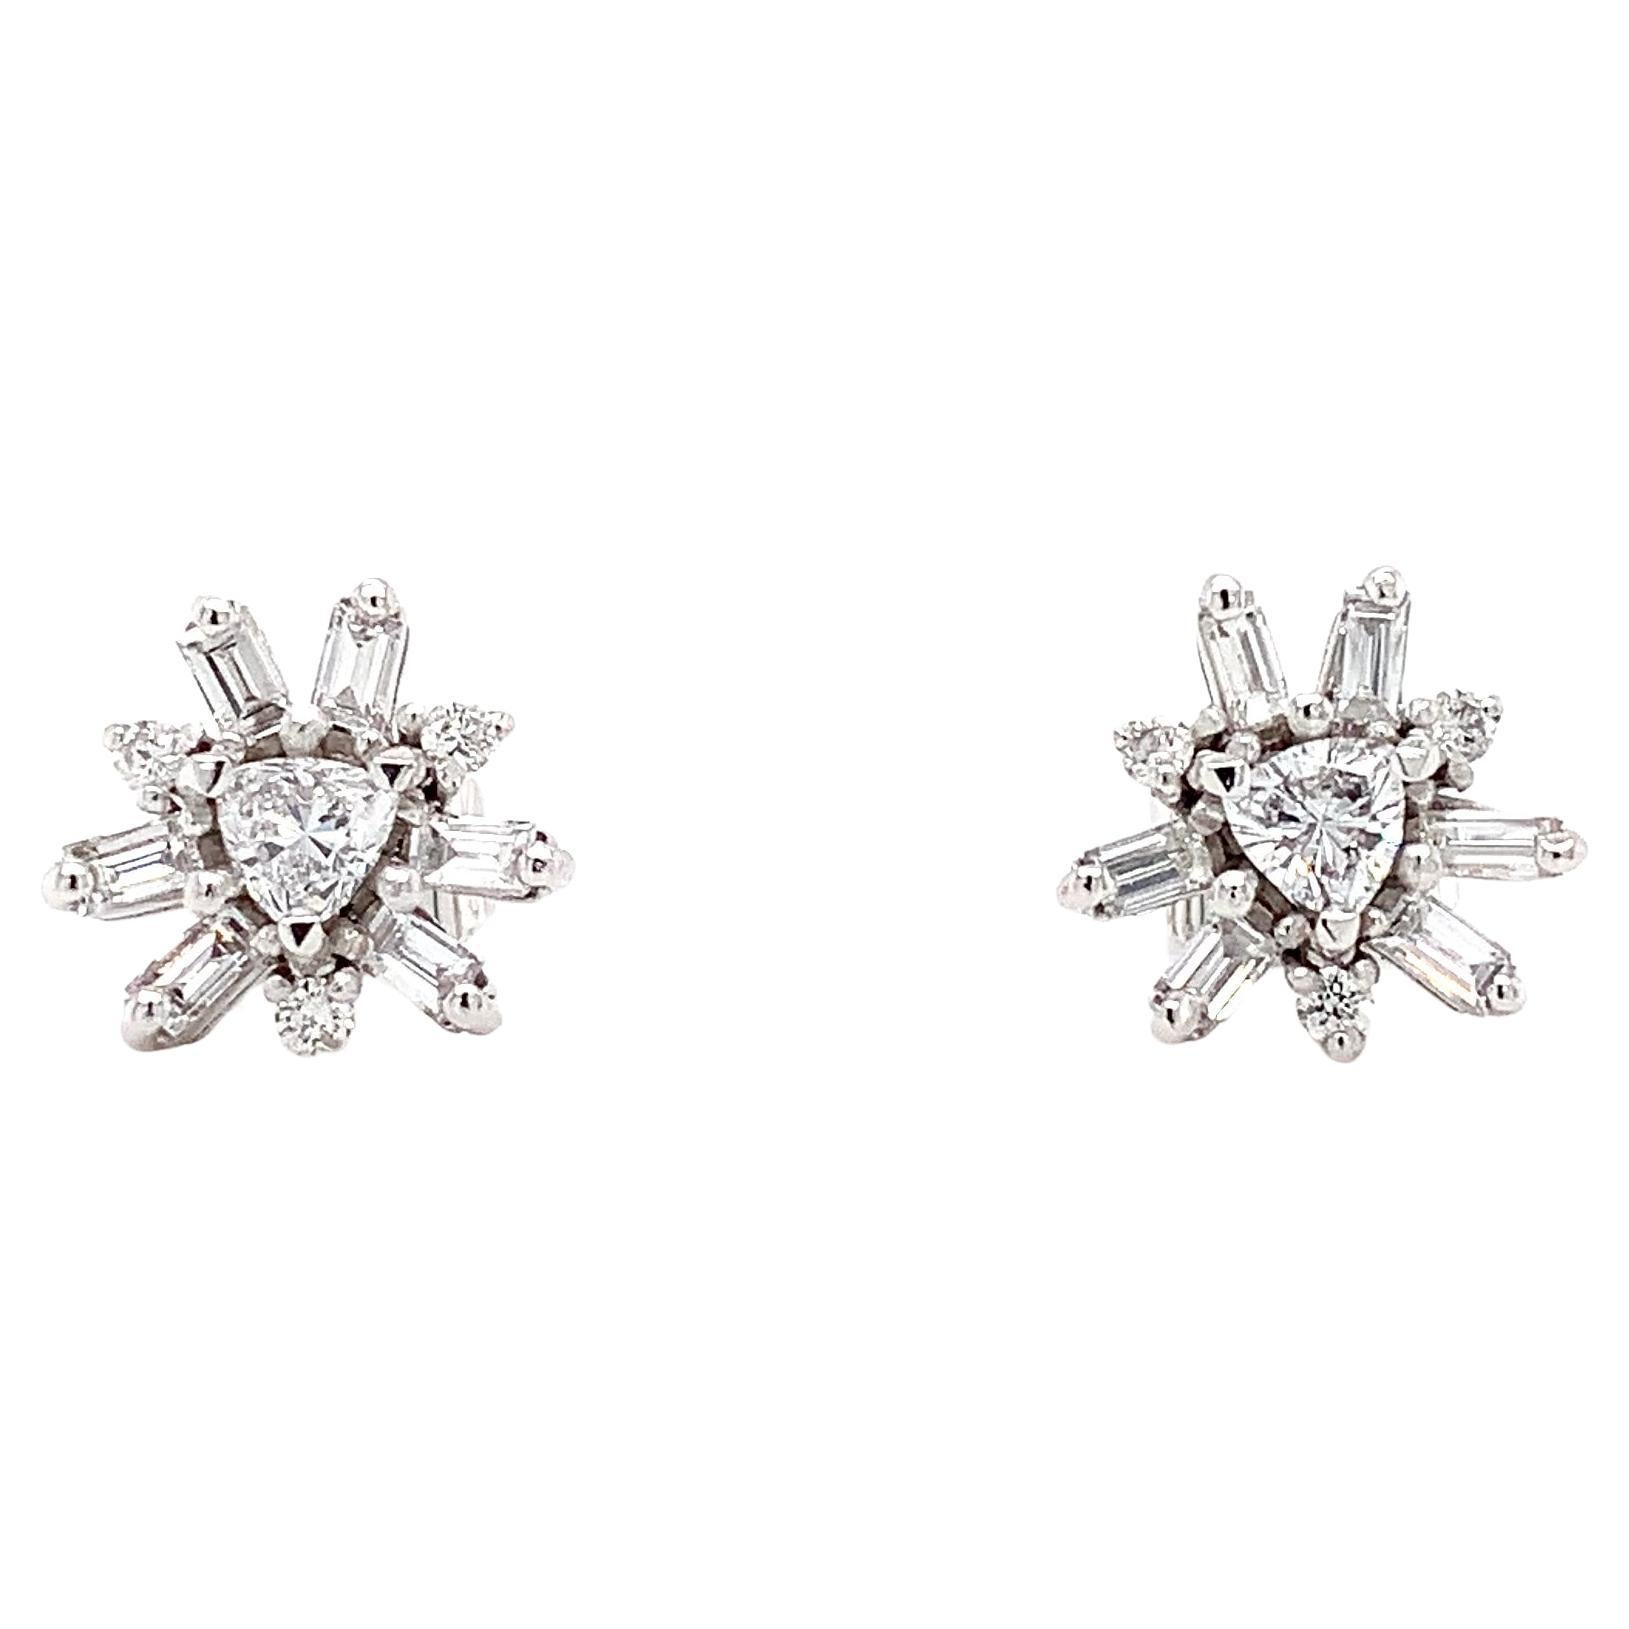 Baguette and trillion diamond art deco stud earrings platinum